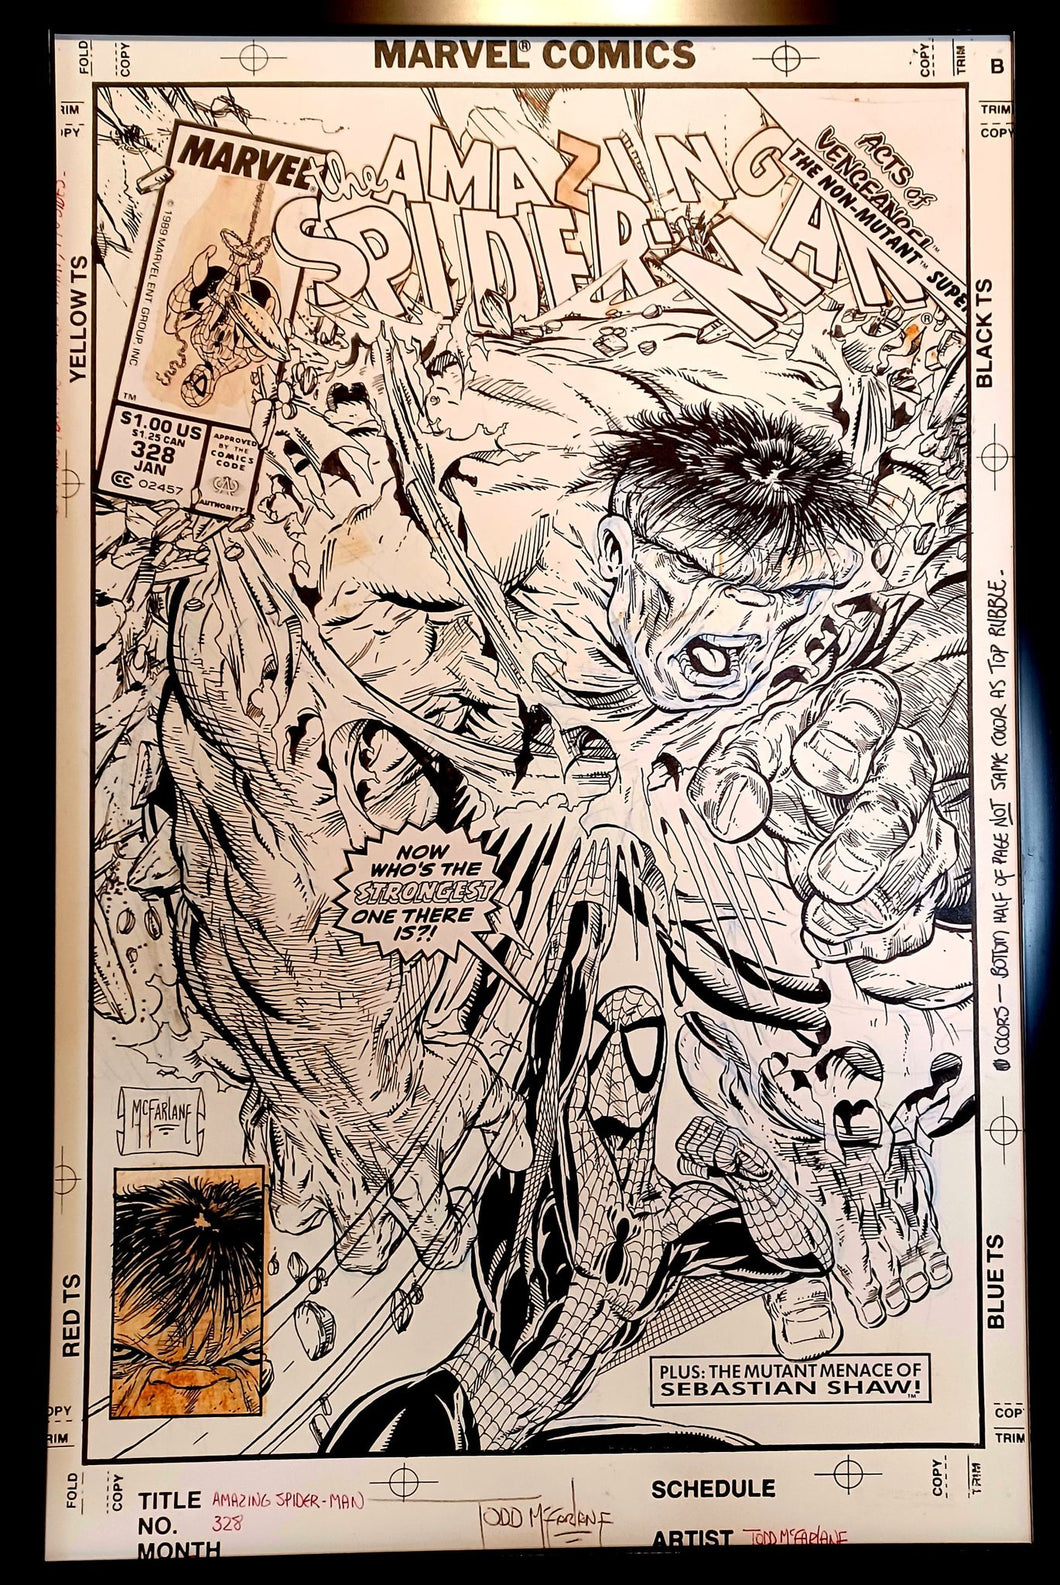 Amazing Spider-Man #328 by Todd McFarlane 11x17 FRAMED Original Art Print Comic Poster